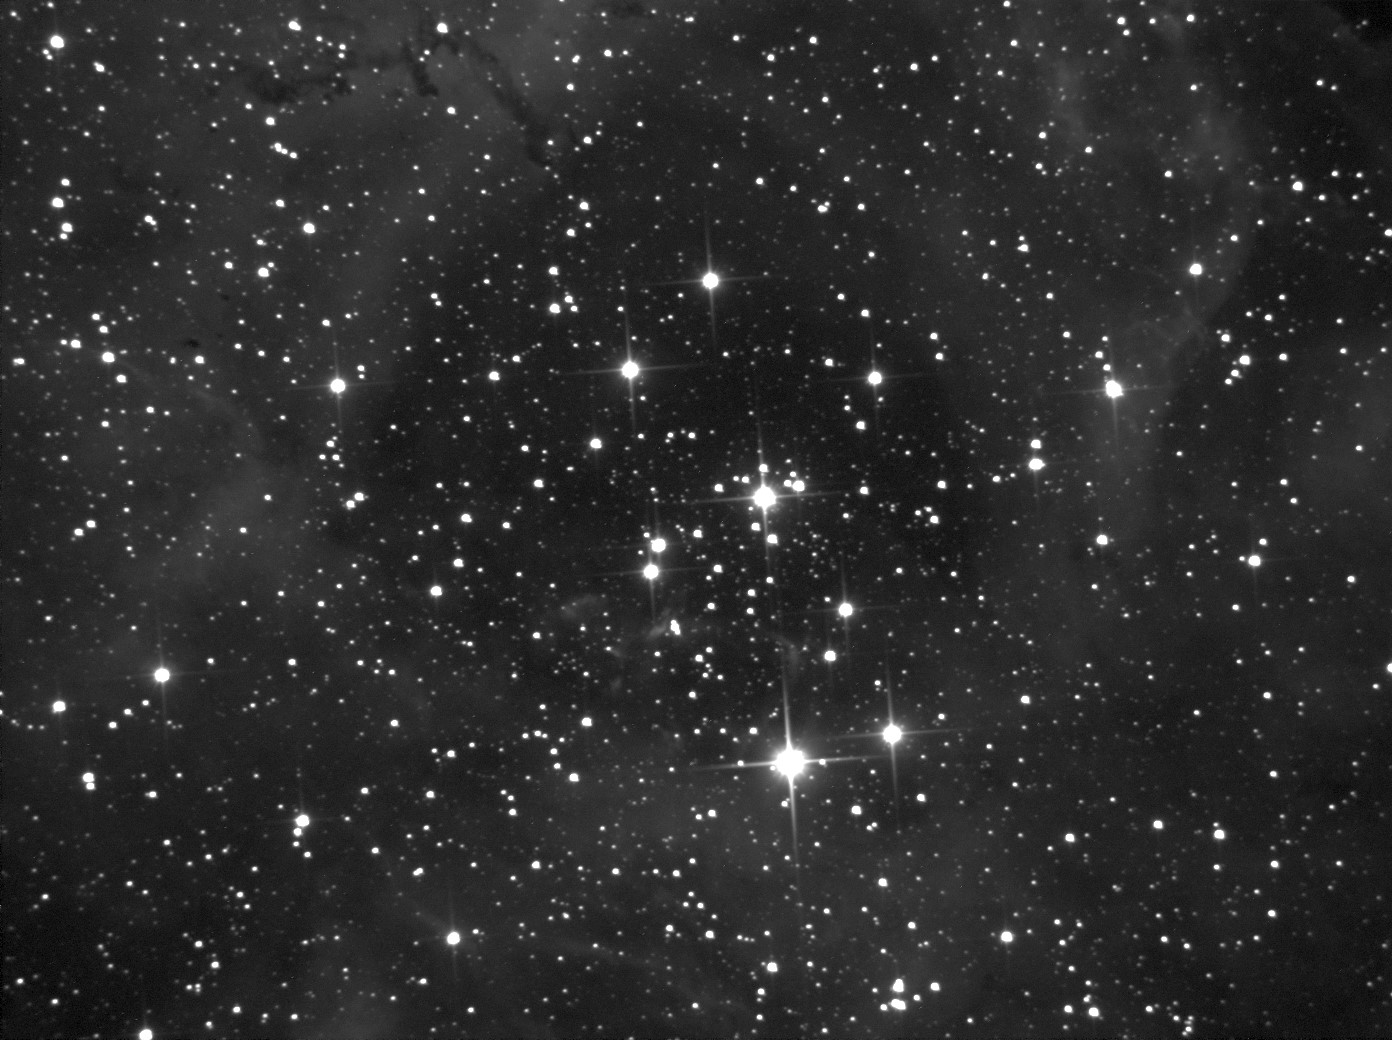 Rosette nebula NGC2238_5x300s_CLS_guiding.jpg